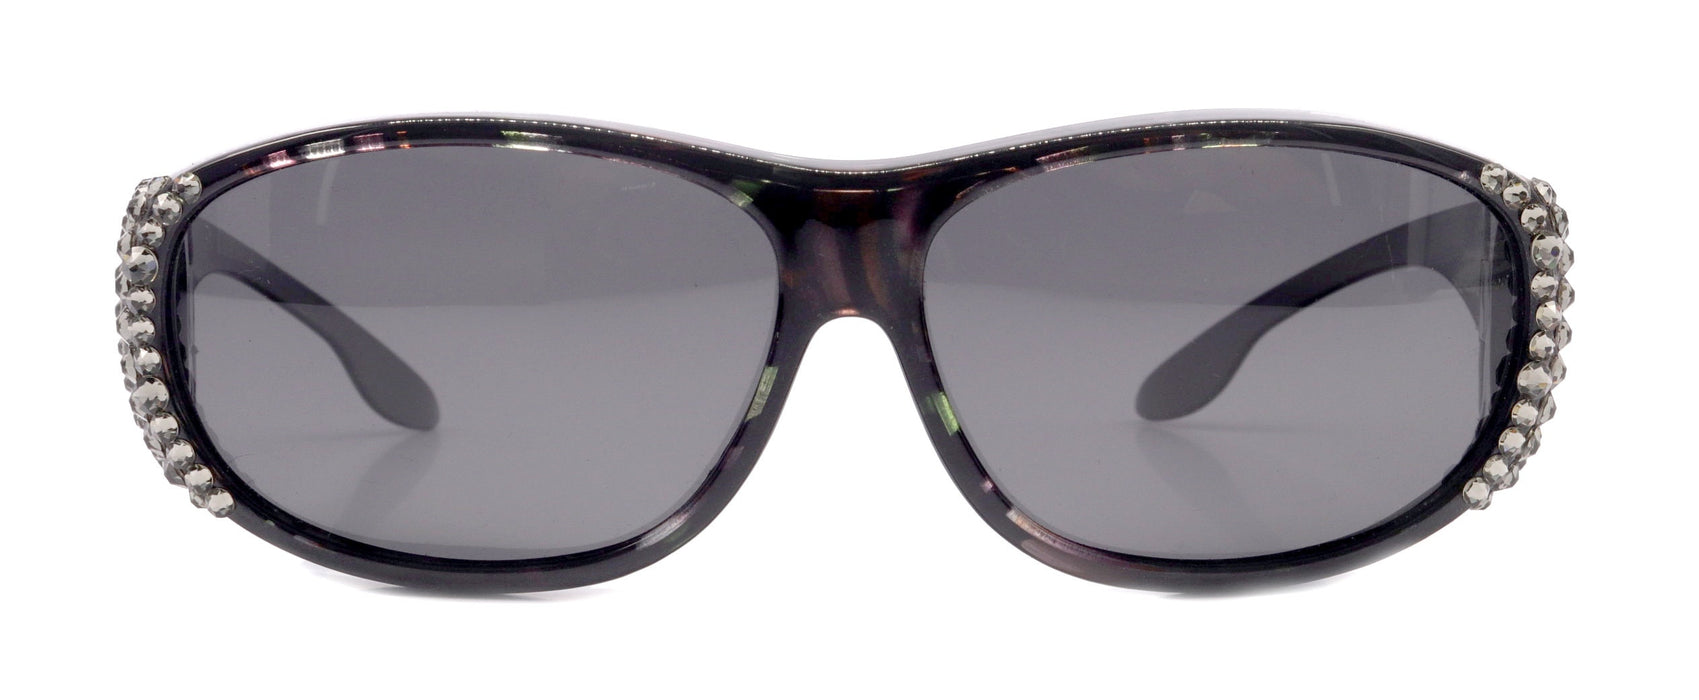 Explorer, (Bling) (Fit Over) Glasses W (Black Diamond) Genuine European Crystals, Polarized Sunglasses 1.1mm (Smoke Grey) NY Fifth Avenue